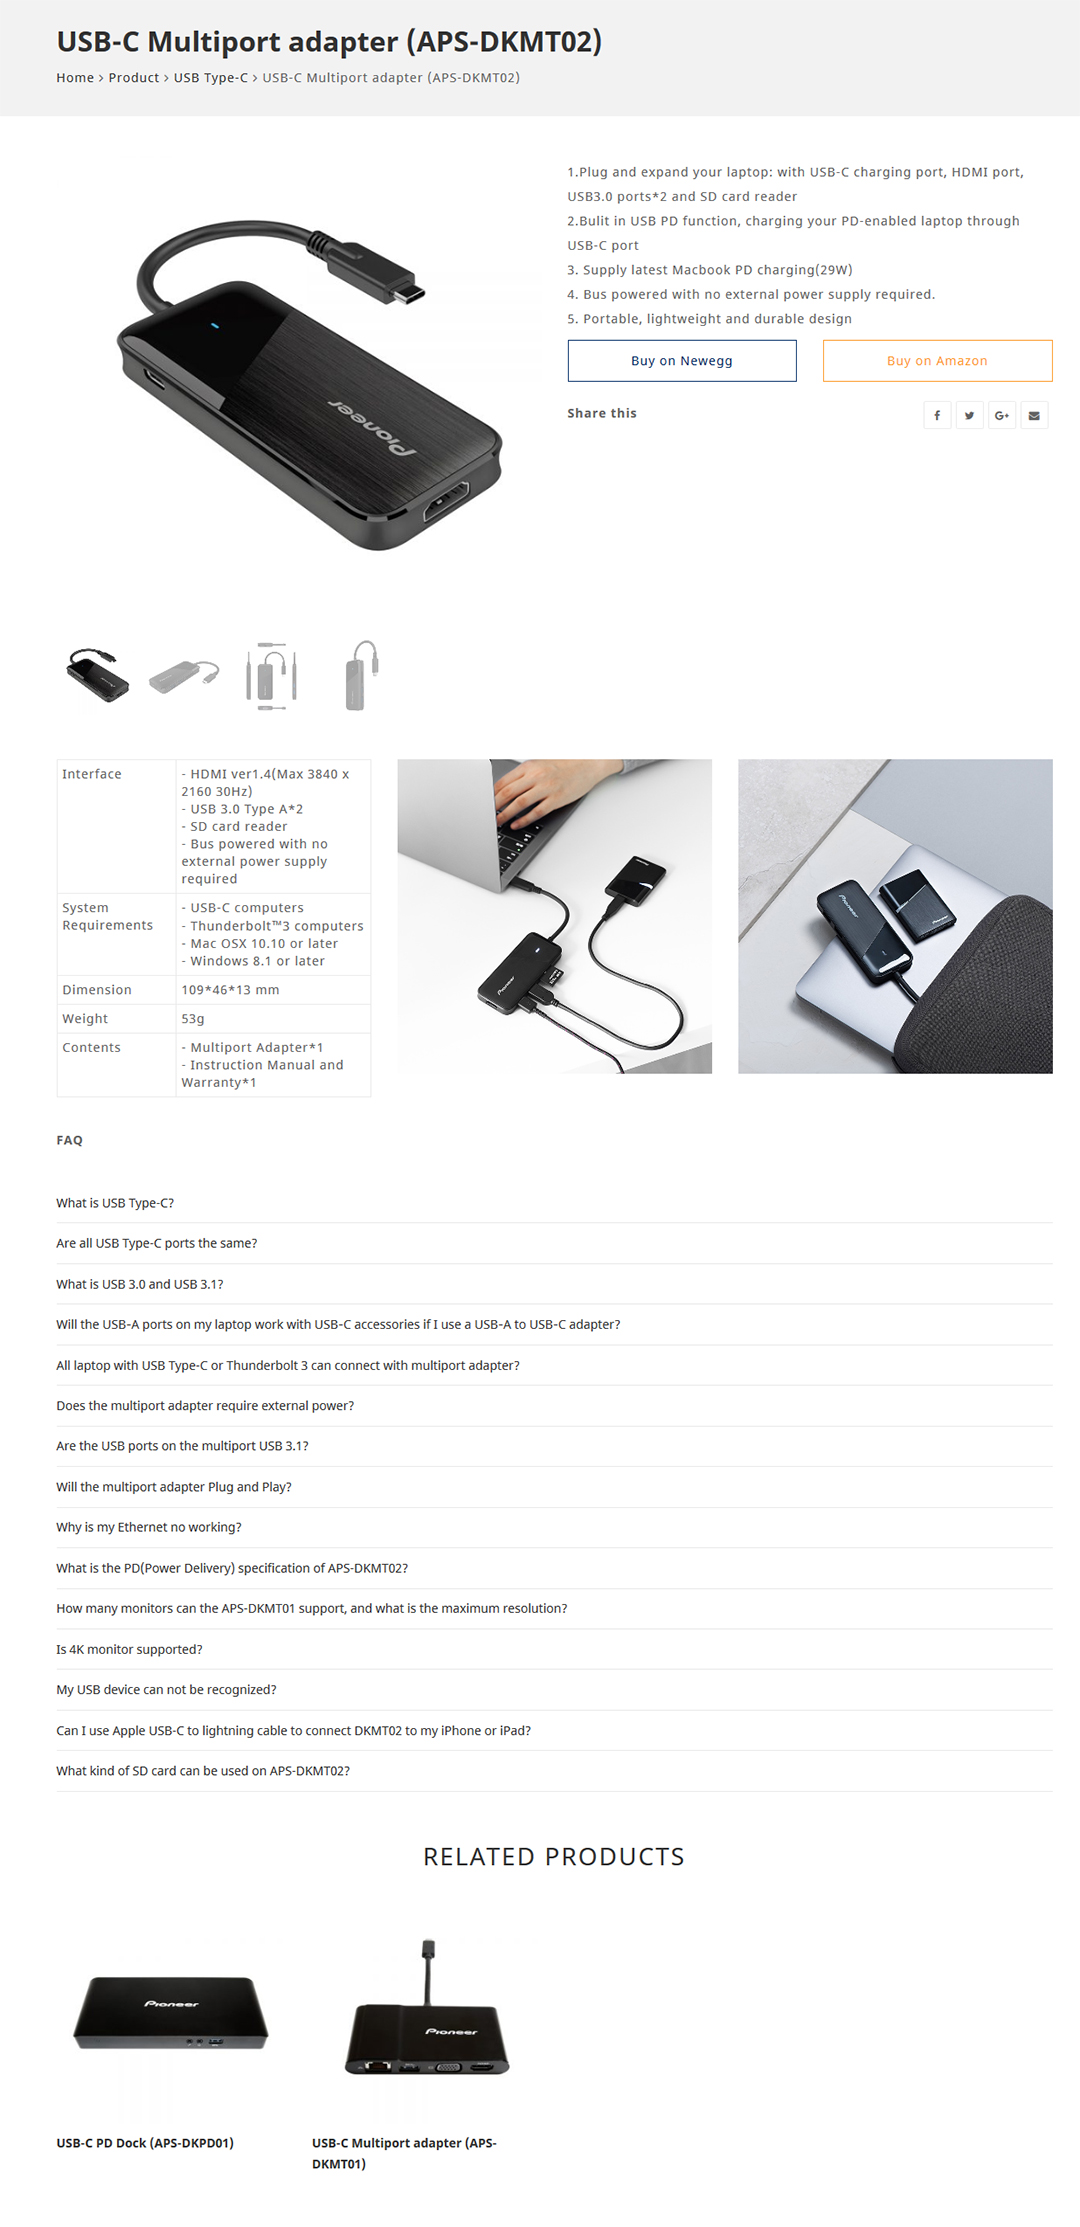 spec Pioneer USB C Multiport adapter (APS DKMT02) Review